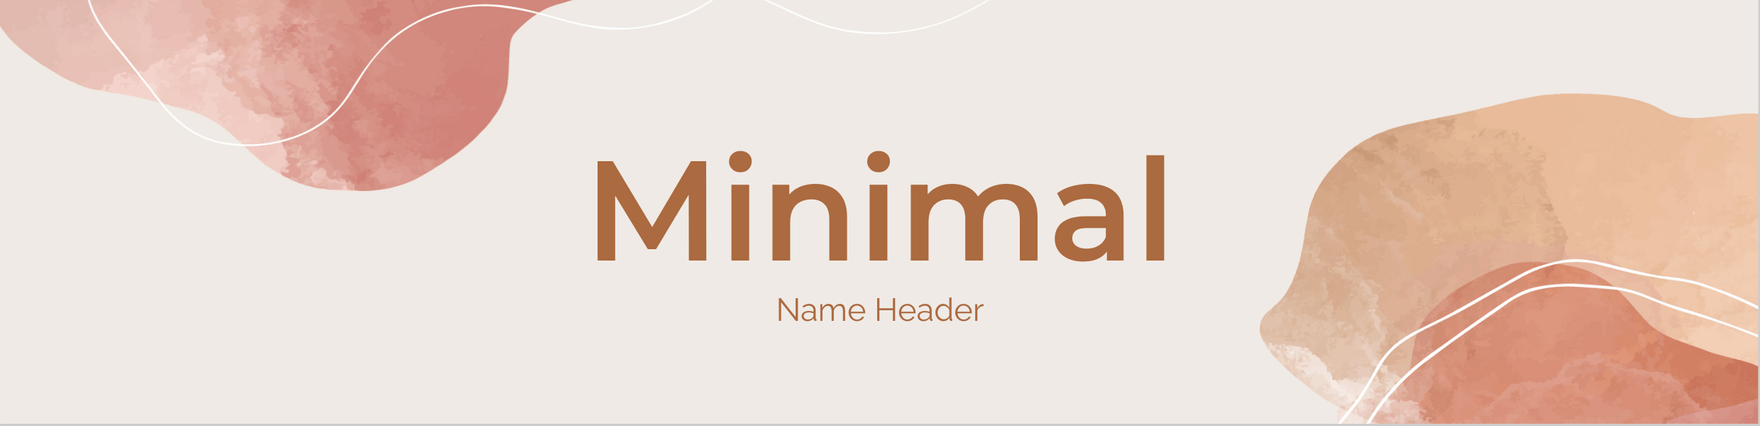 Minimal Name Header